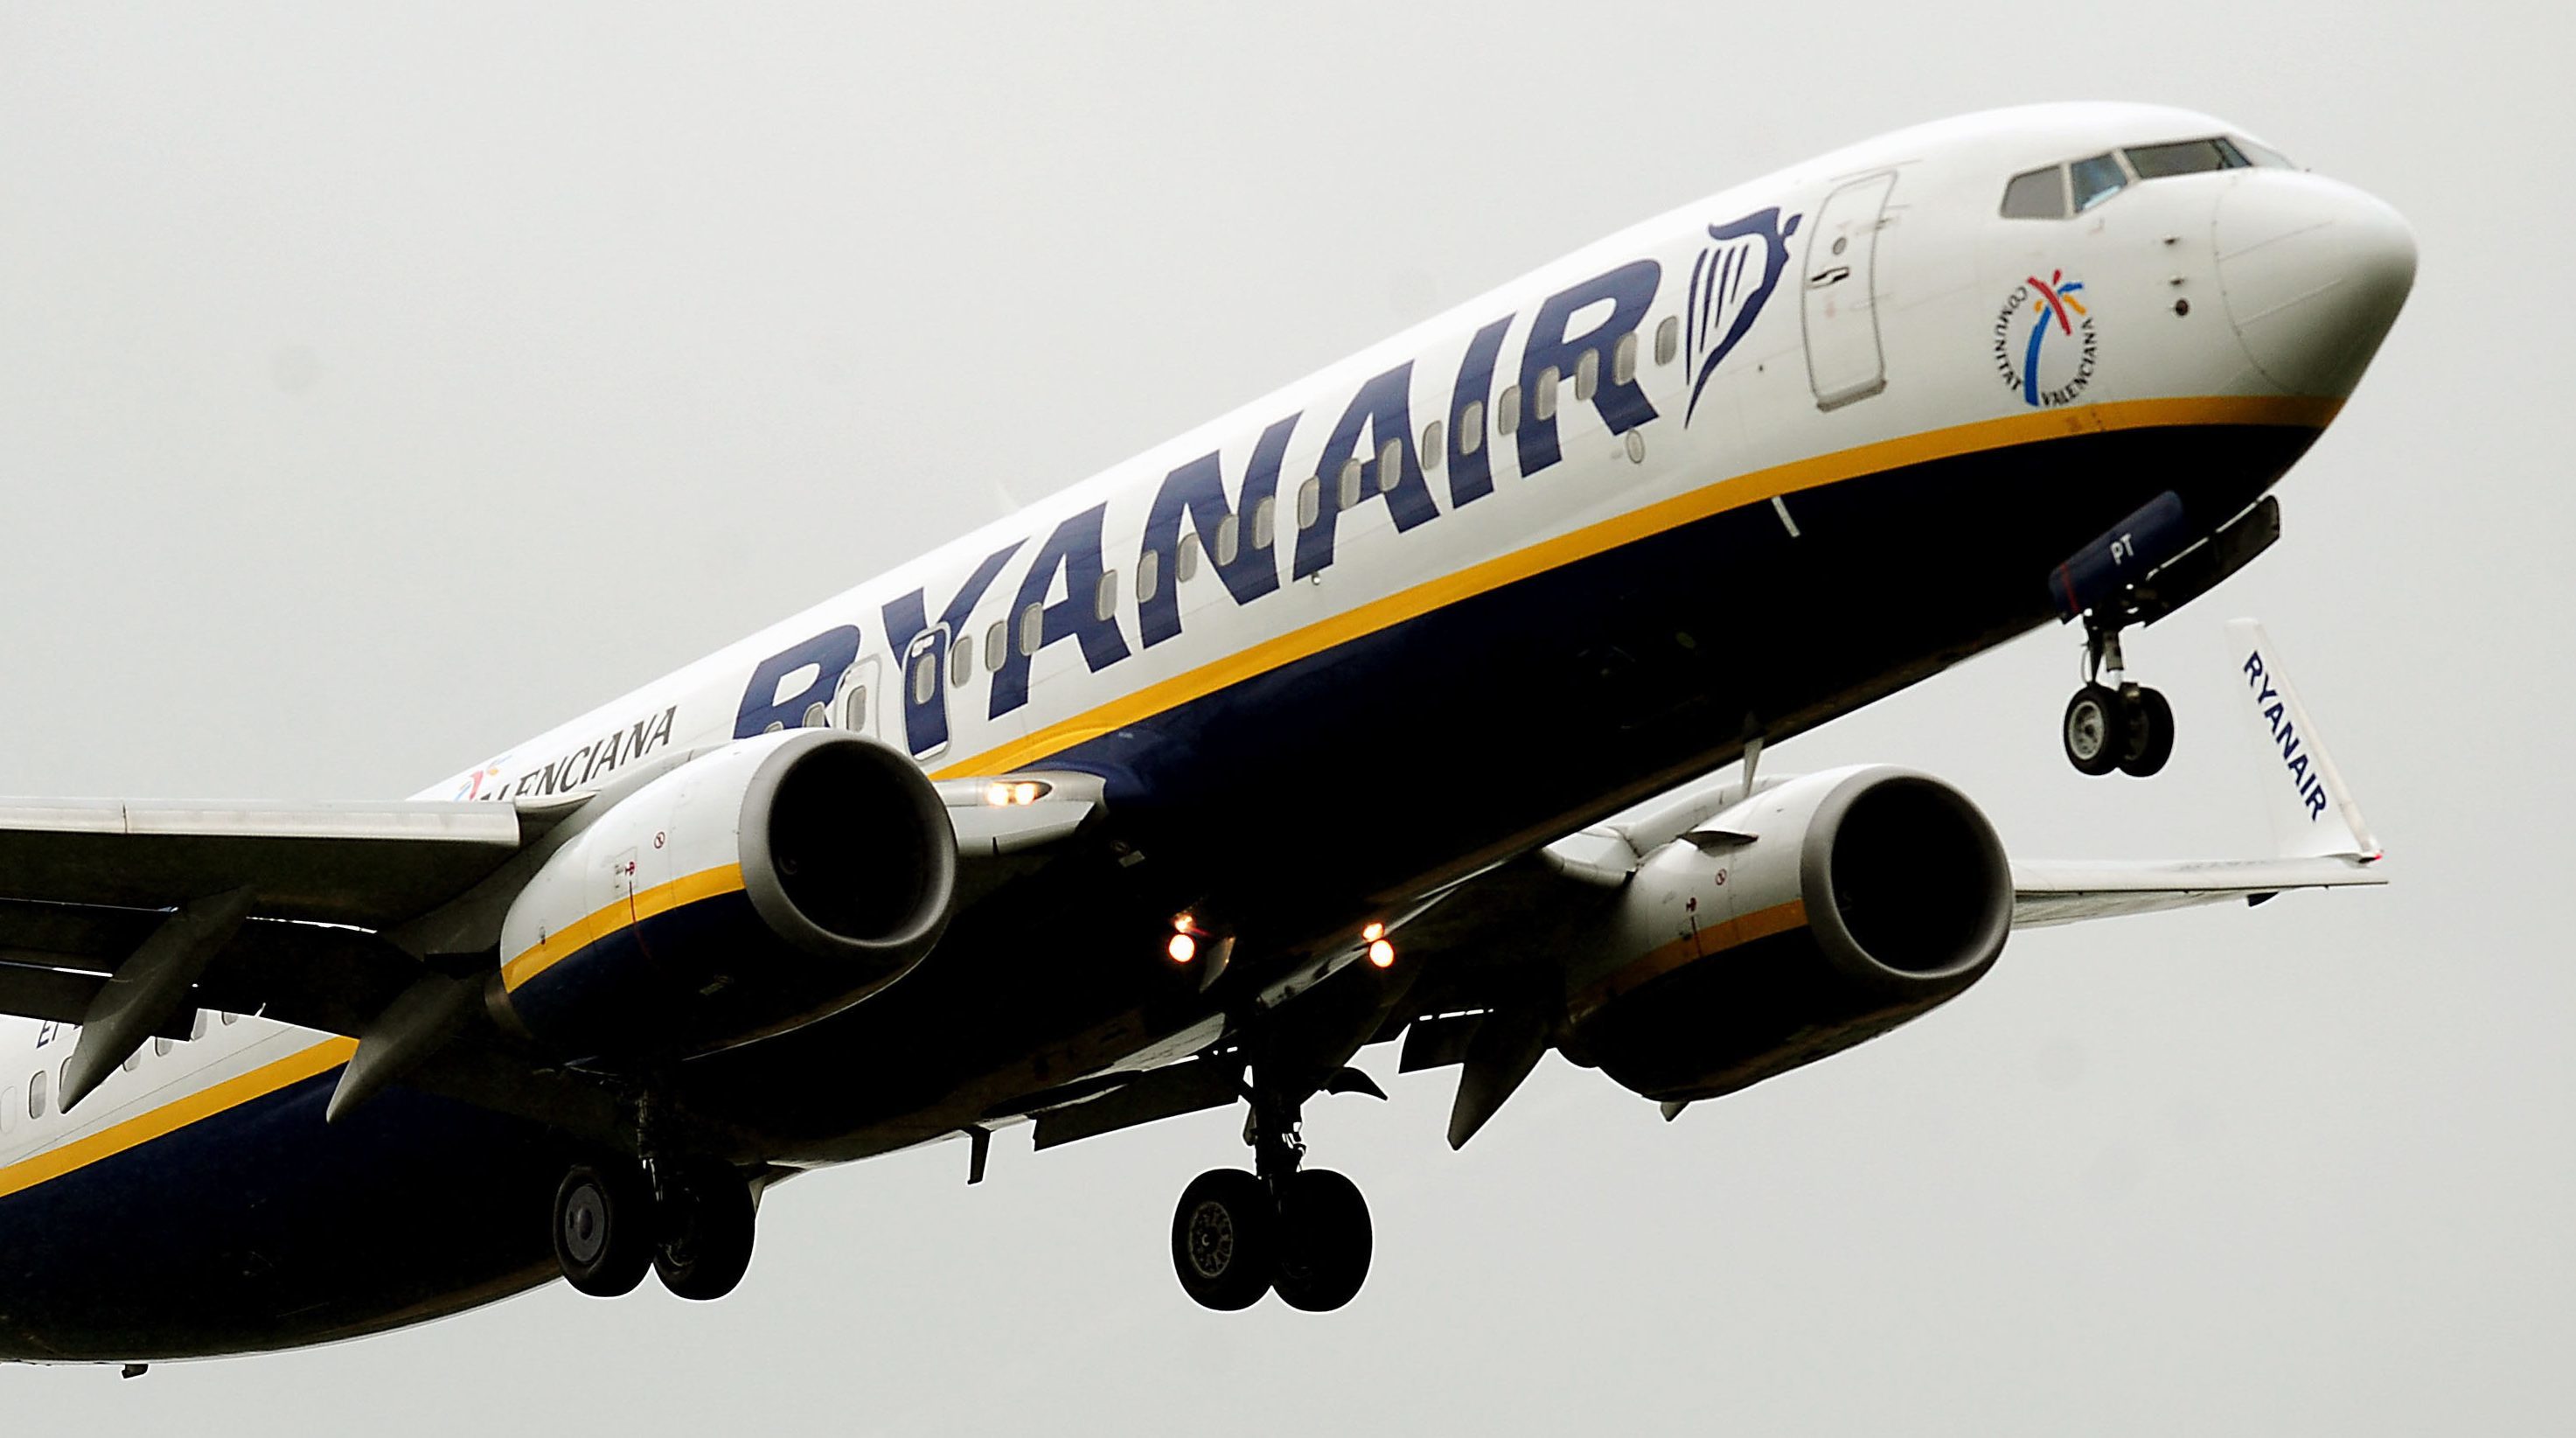 Ryanair has been slashing fares to boost demand.